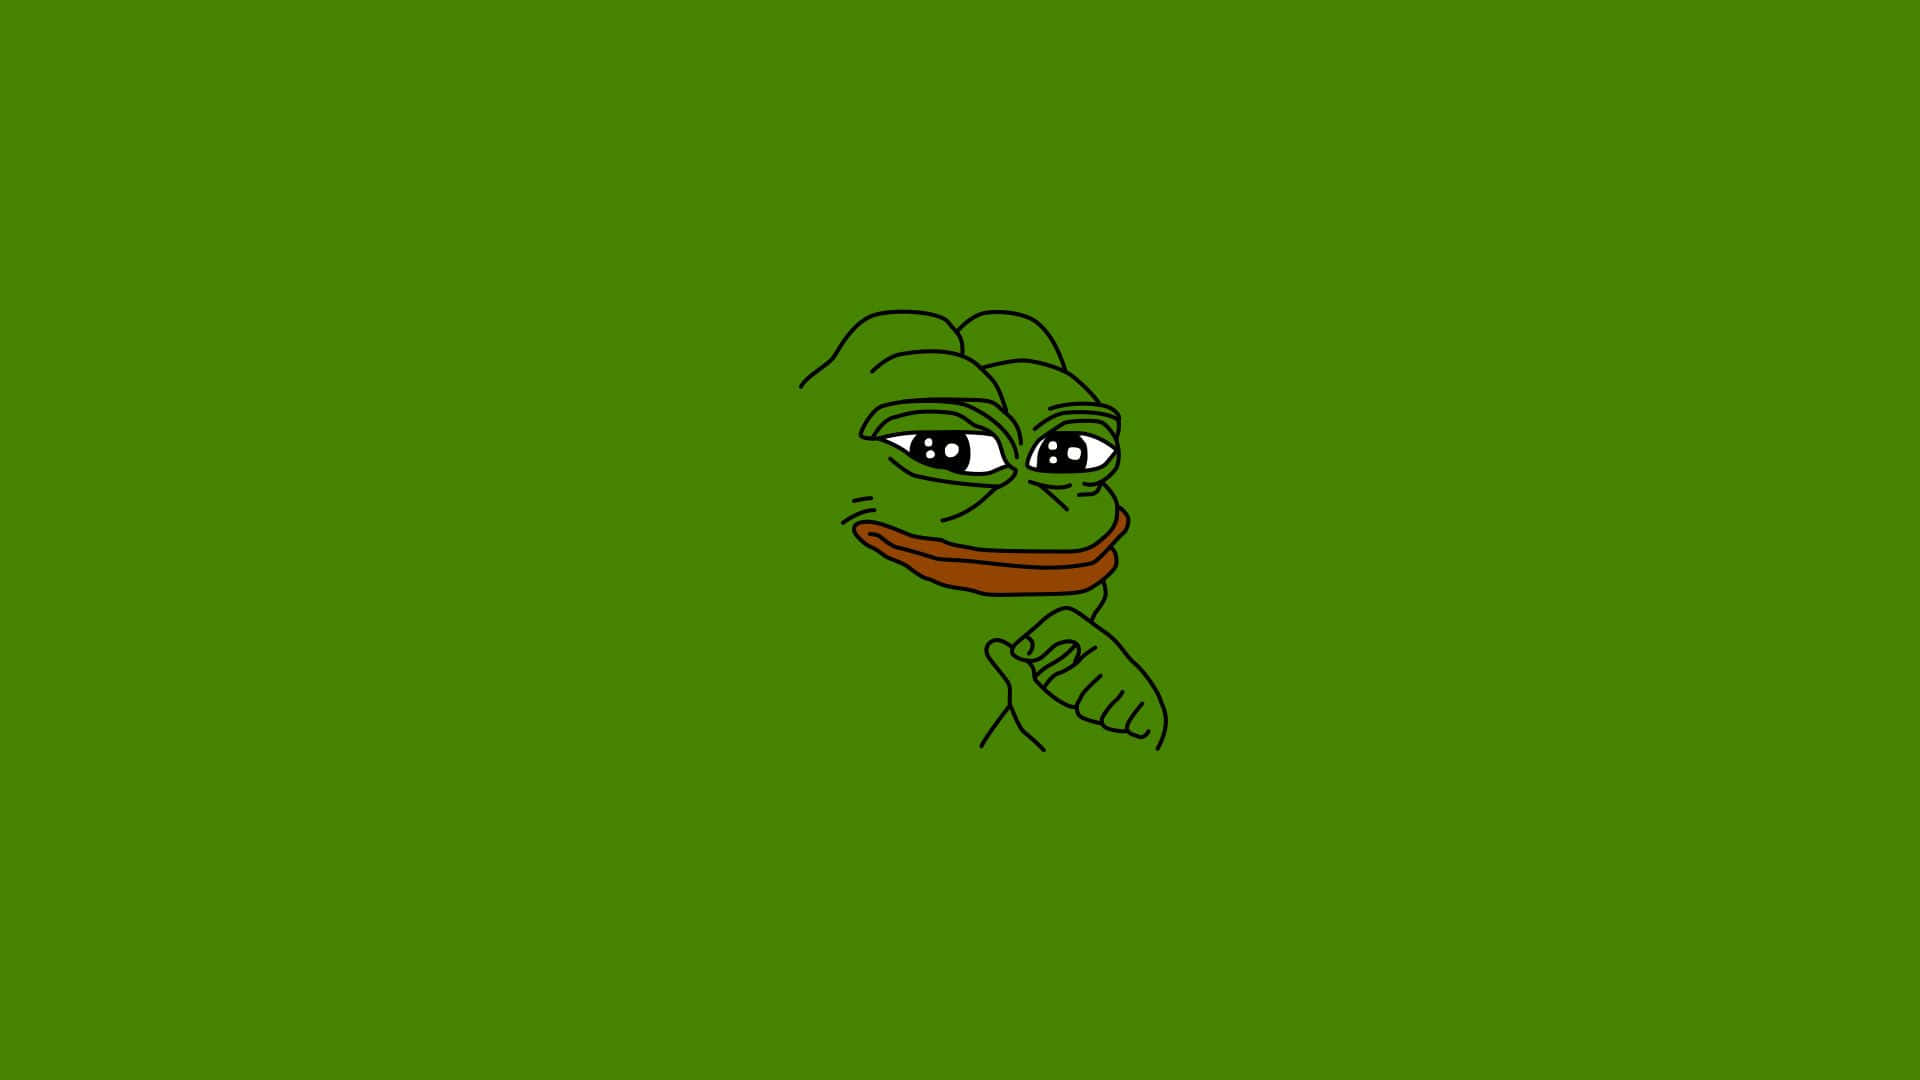 Pepe The Frog Meme Laptop Wallpaper